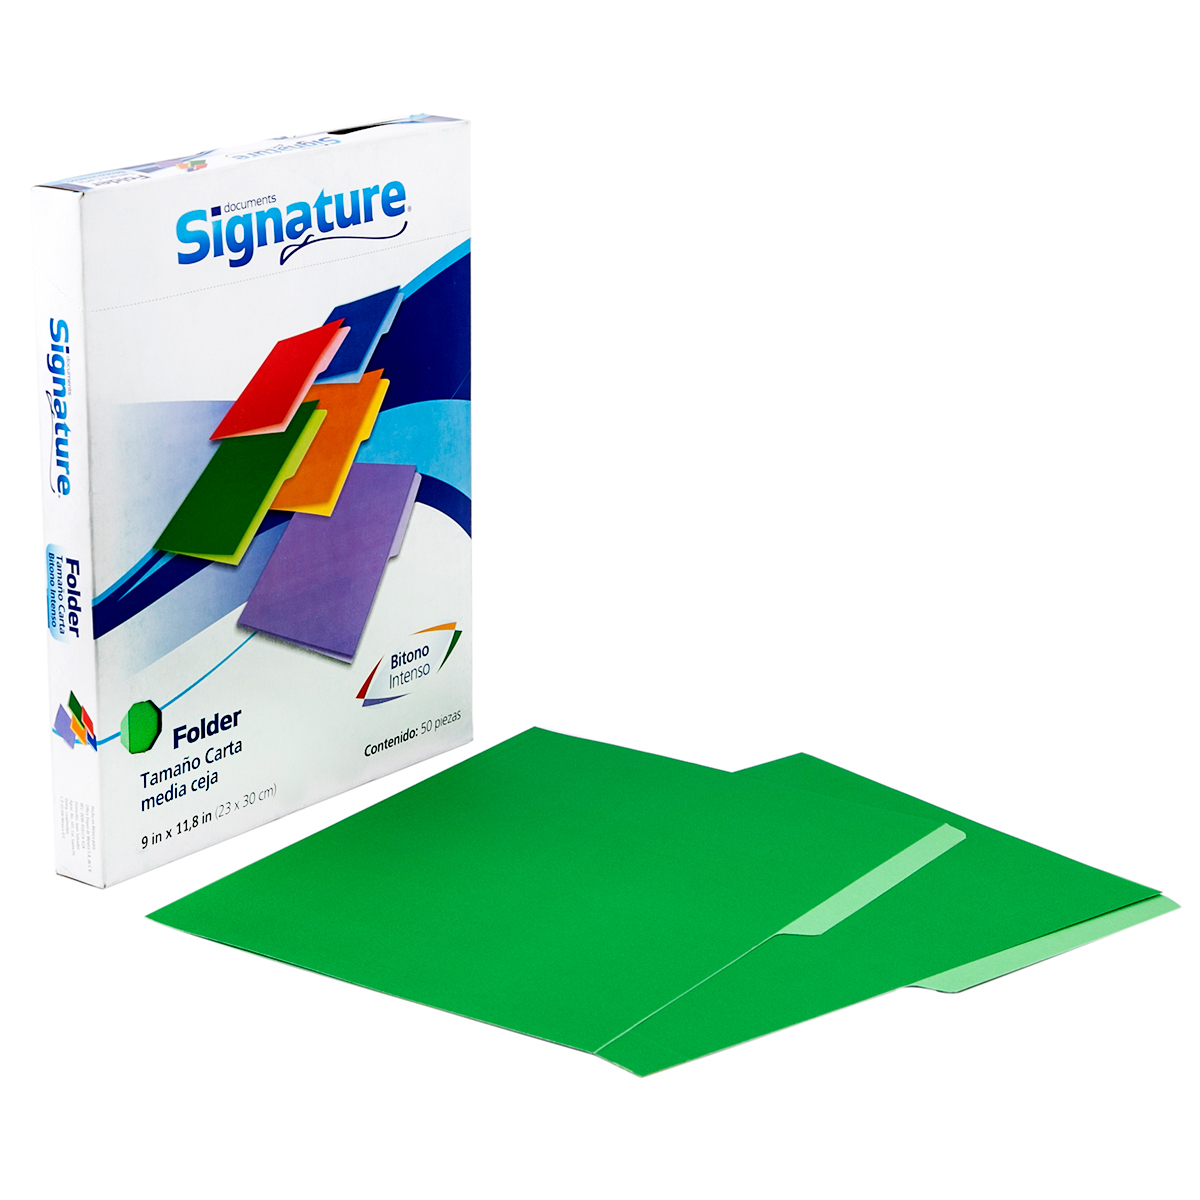 Folders Carta con Media Ceja Bitono Signature Verde 50 piezas | Office Depot  Mexico